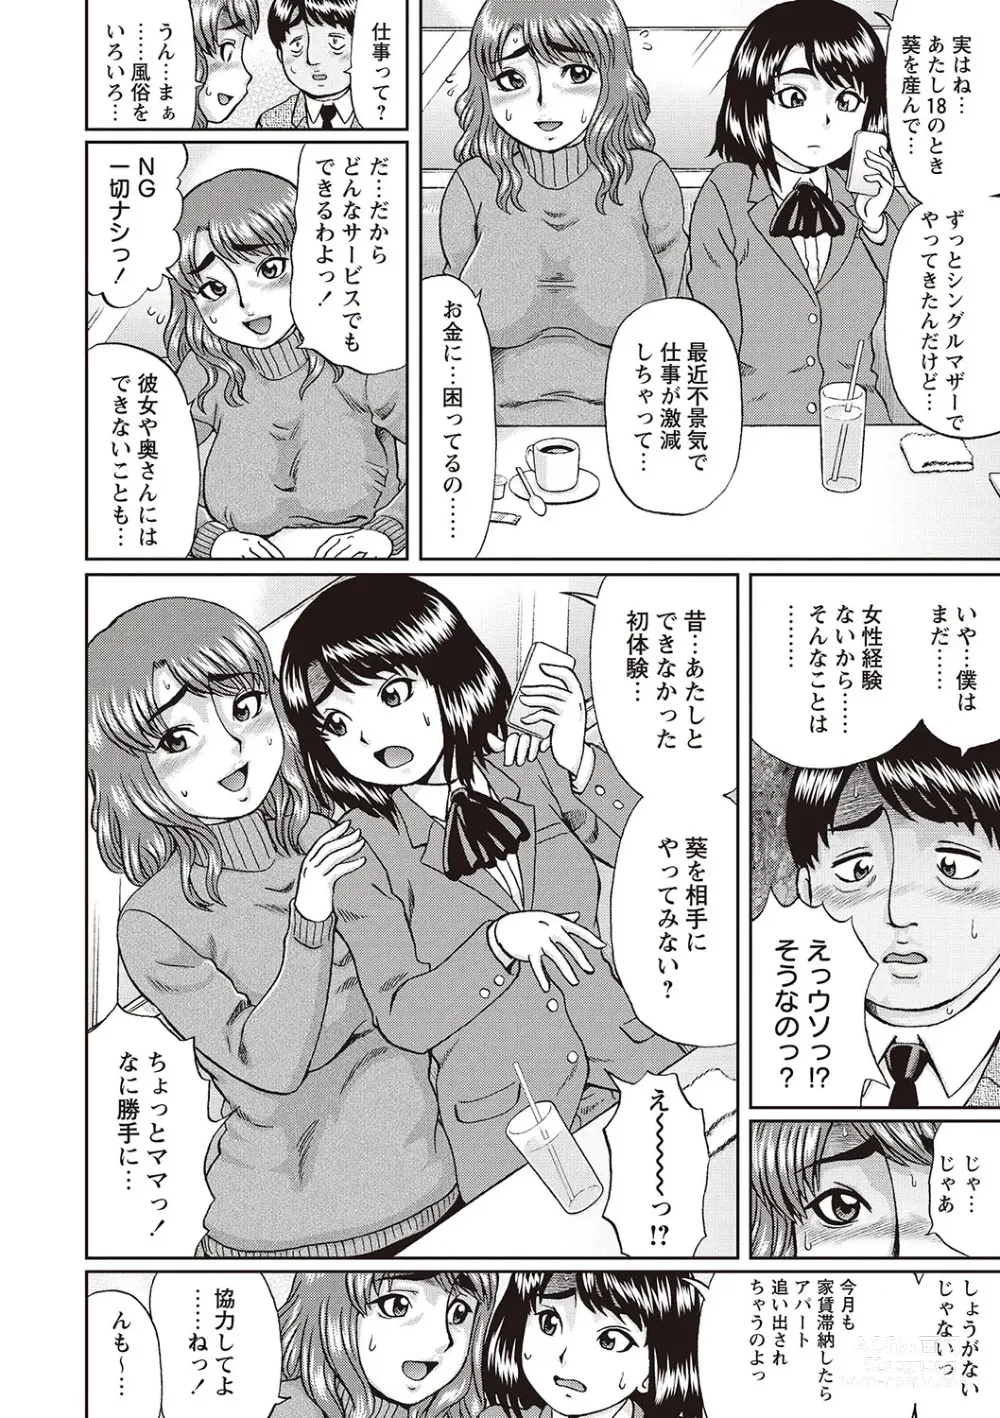 Page 39 of manga Doutei Revenge SEX